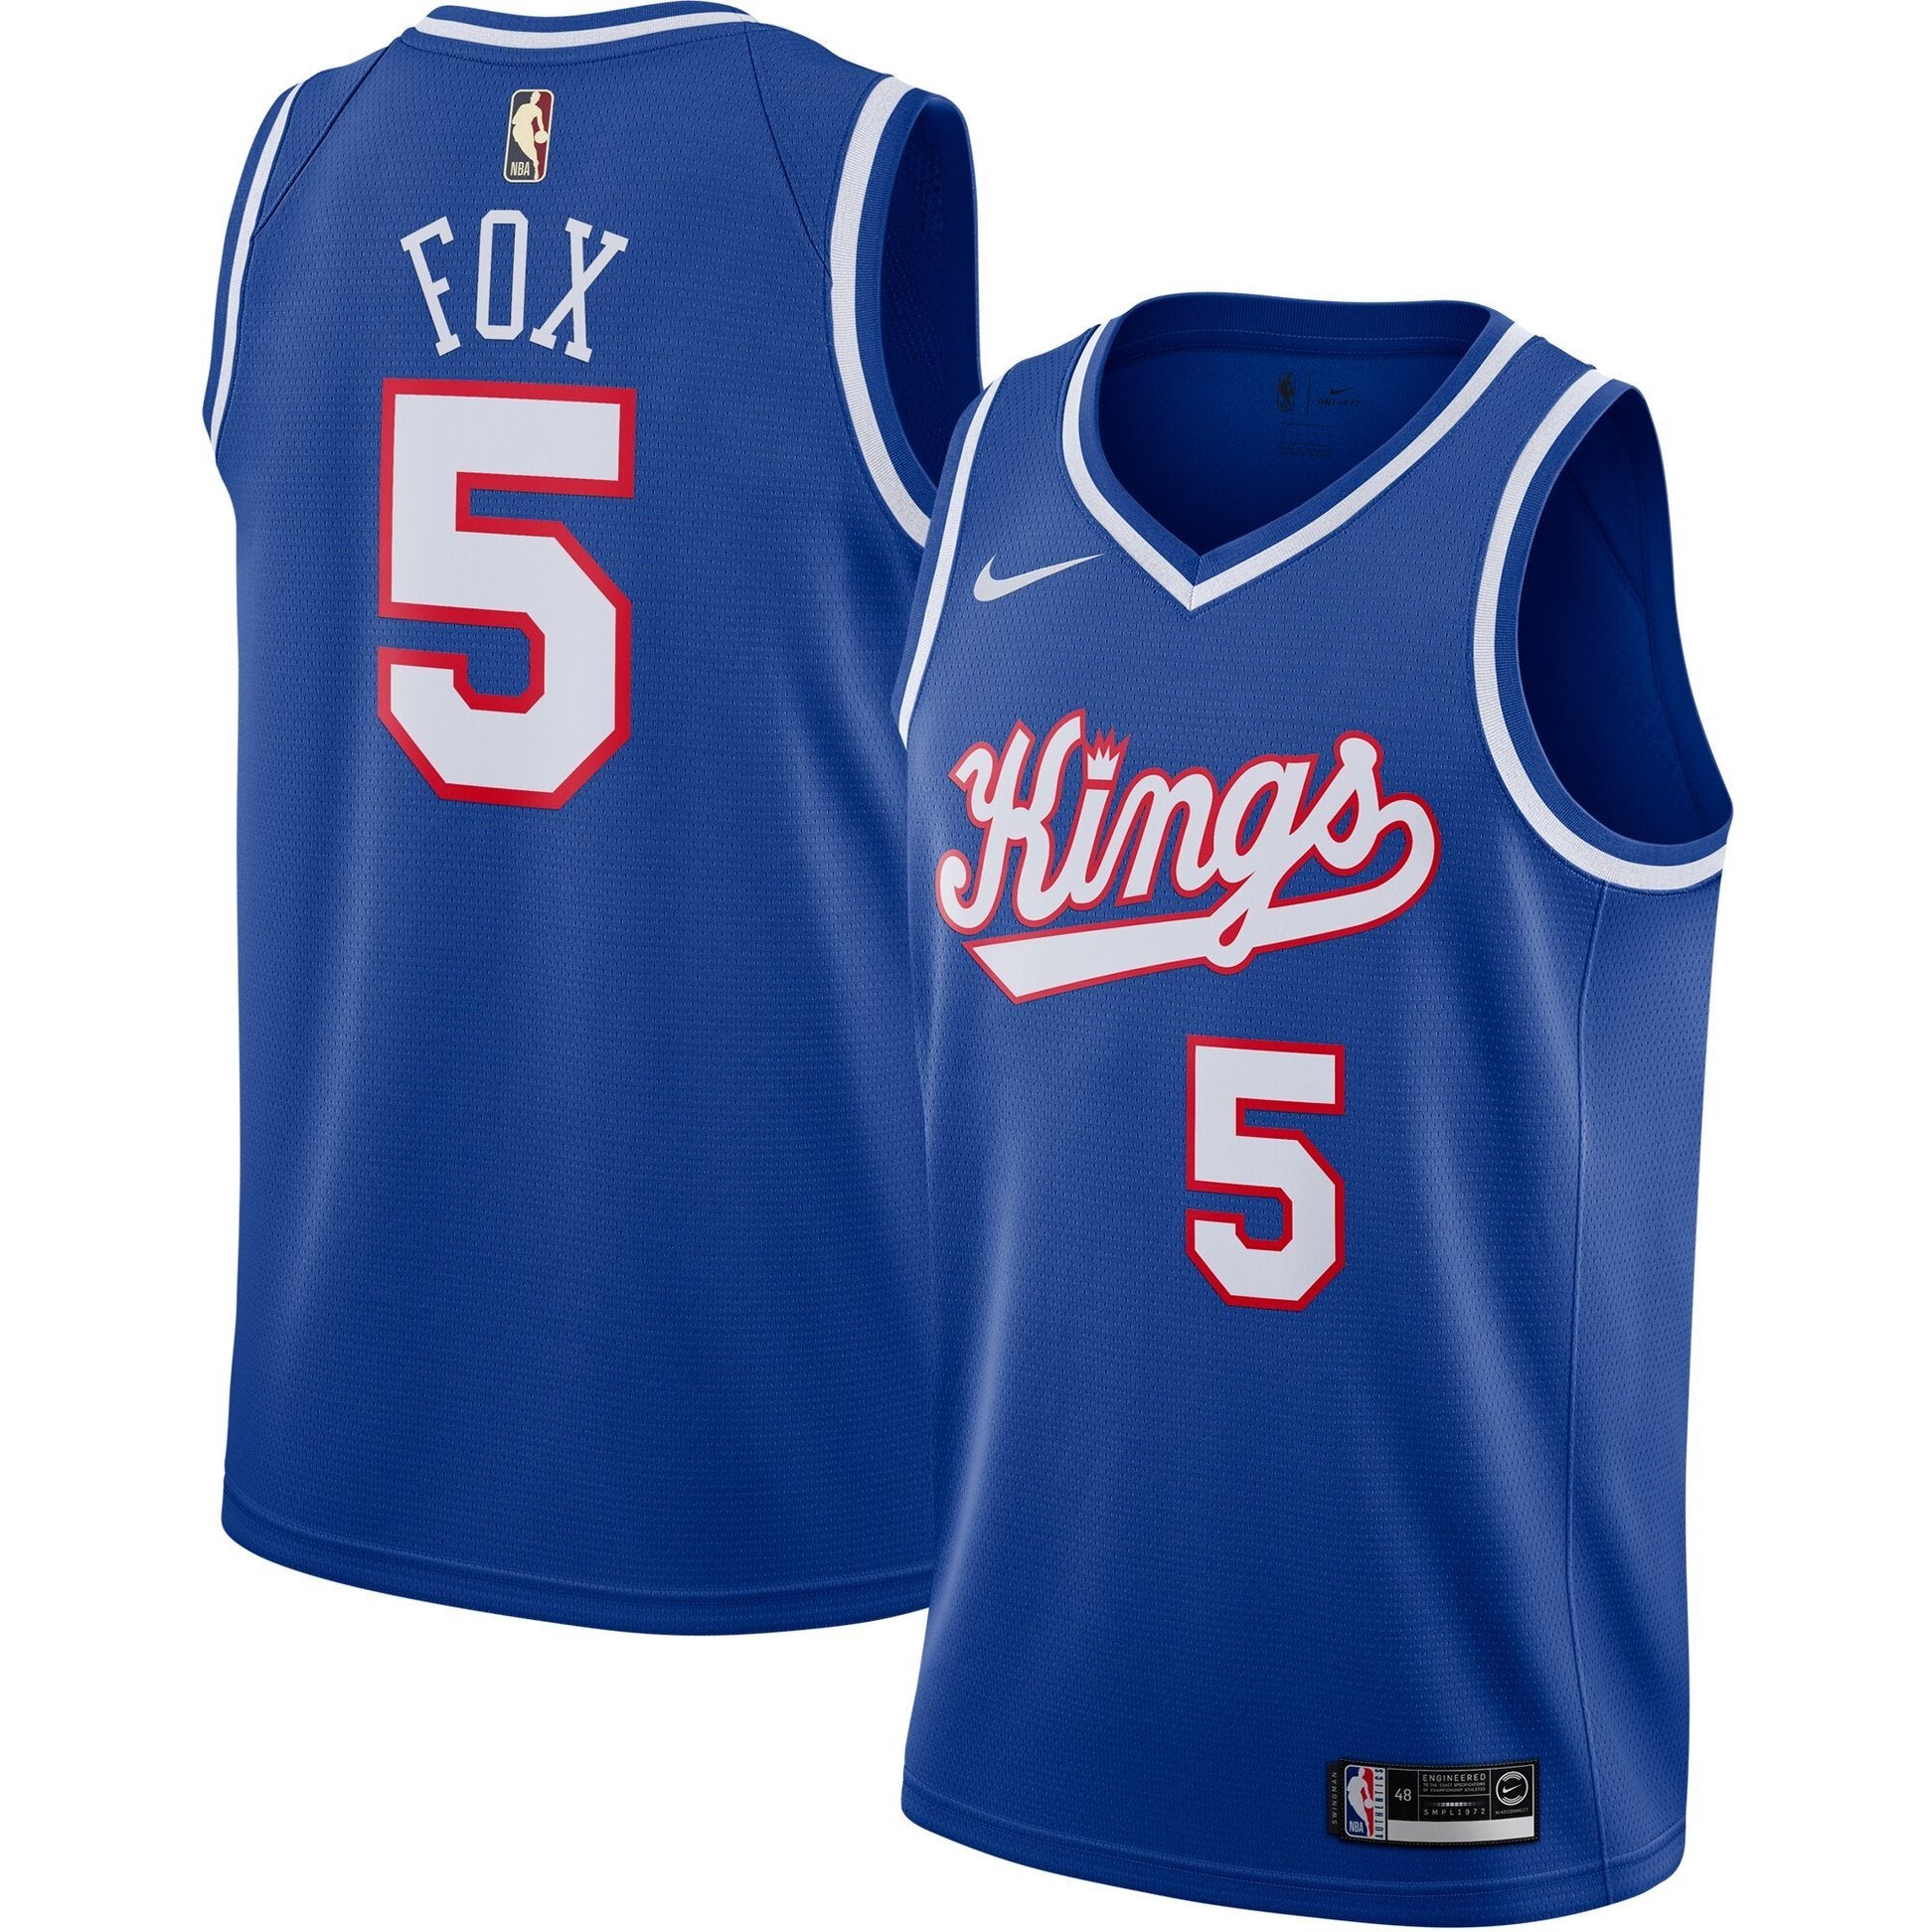 Kings 5# De'Aaron Fox Basketball Jersey,2021 New Season City Edition  Basketball Jerseys for Men,Retro Basketball Boy's Jersey (S-XXL) blue2-S :  : Clothing, Shoes & Accessories